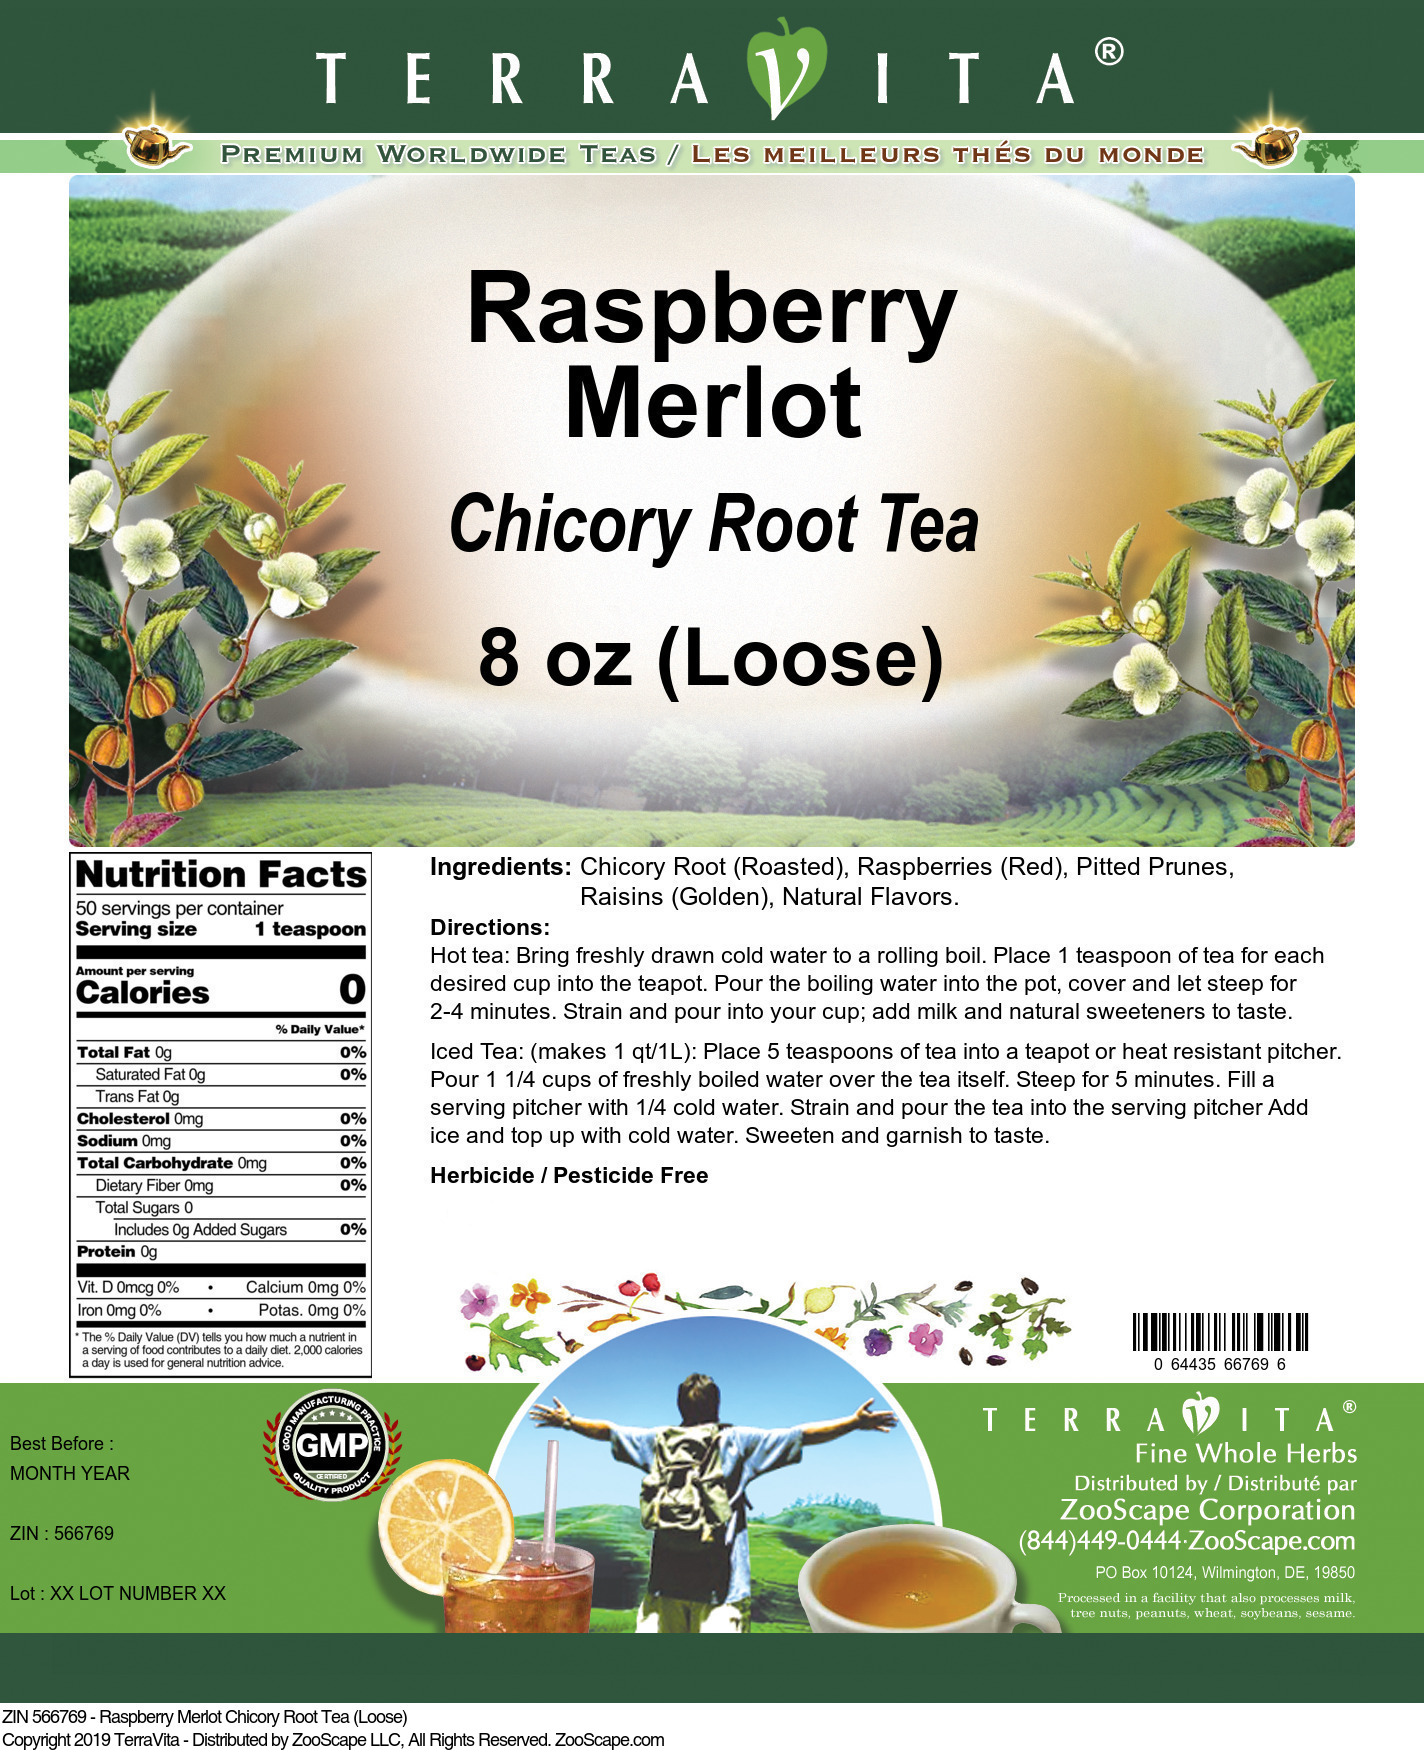 Raspberry Merlot Chicory Root Tea (Loose) - Label